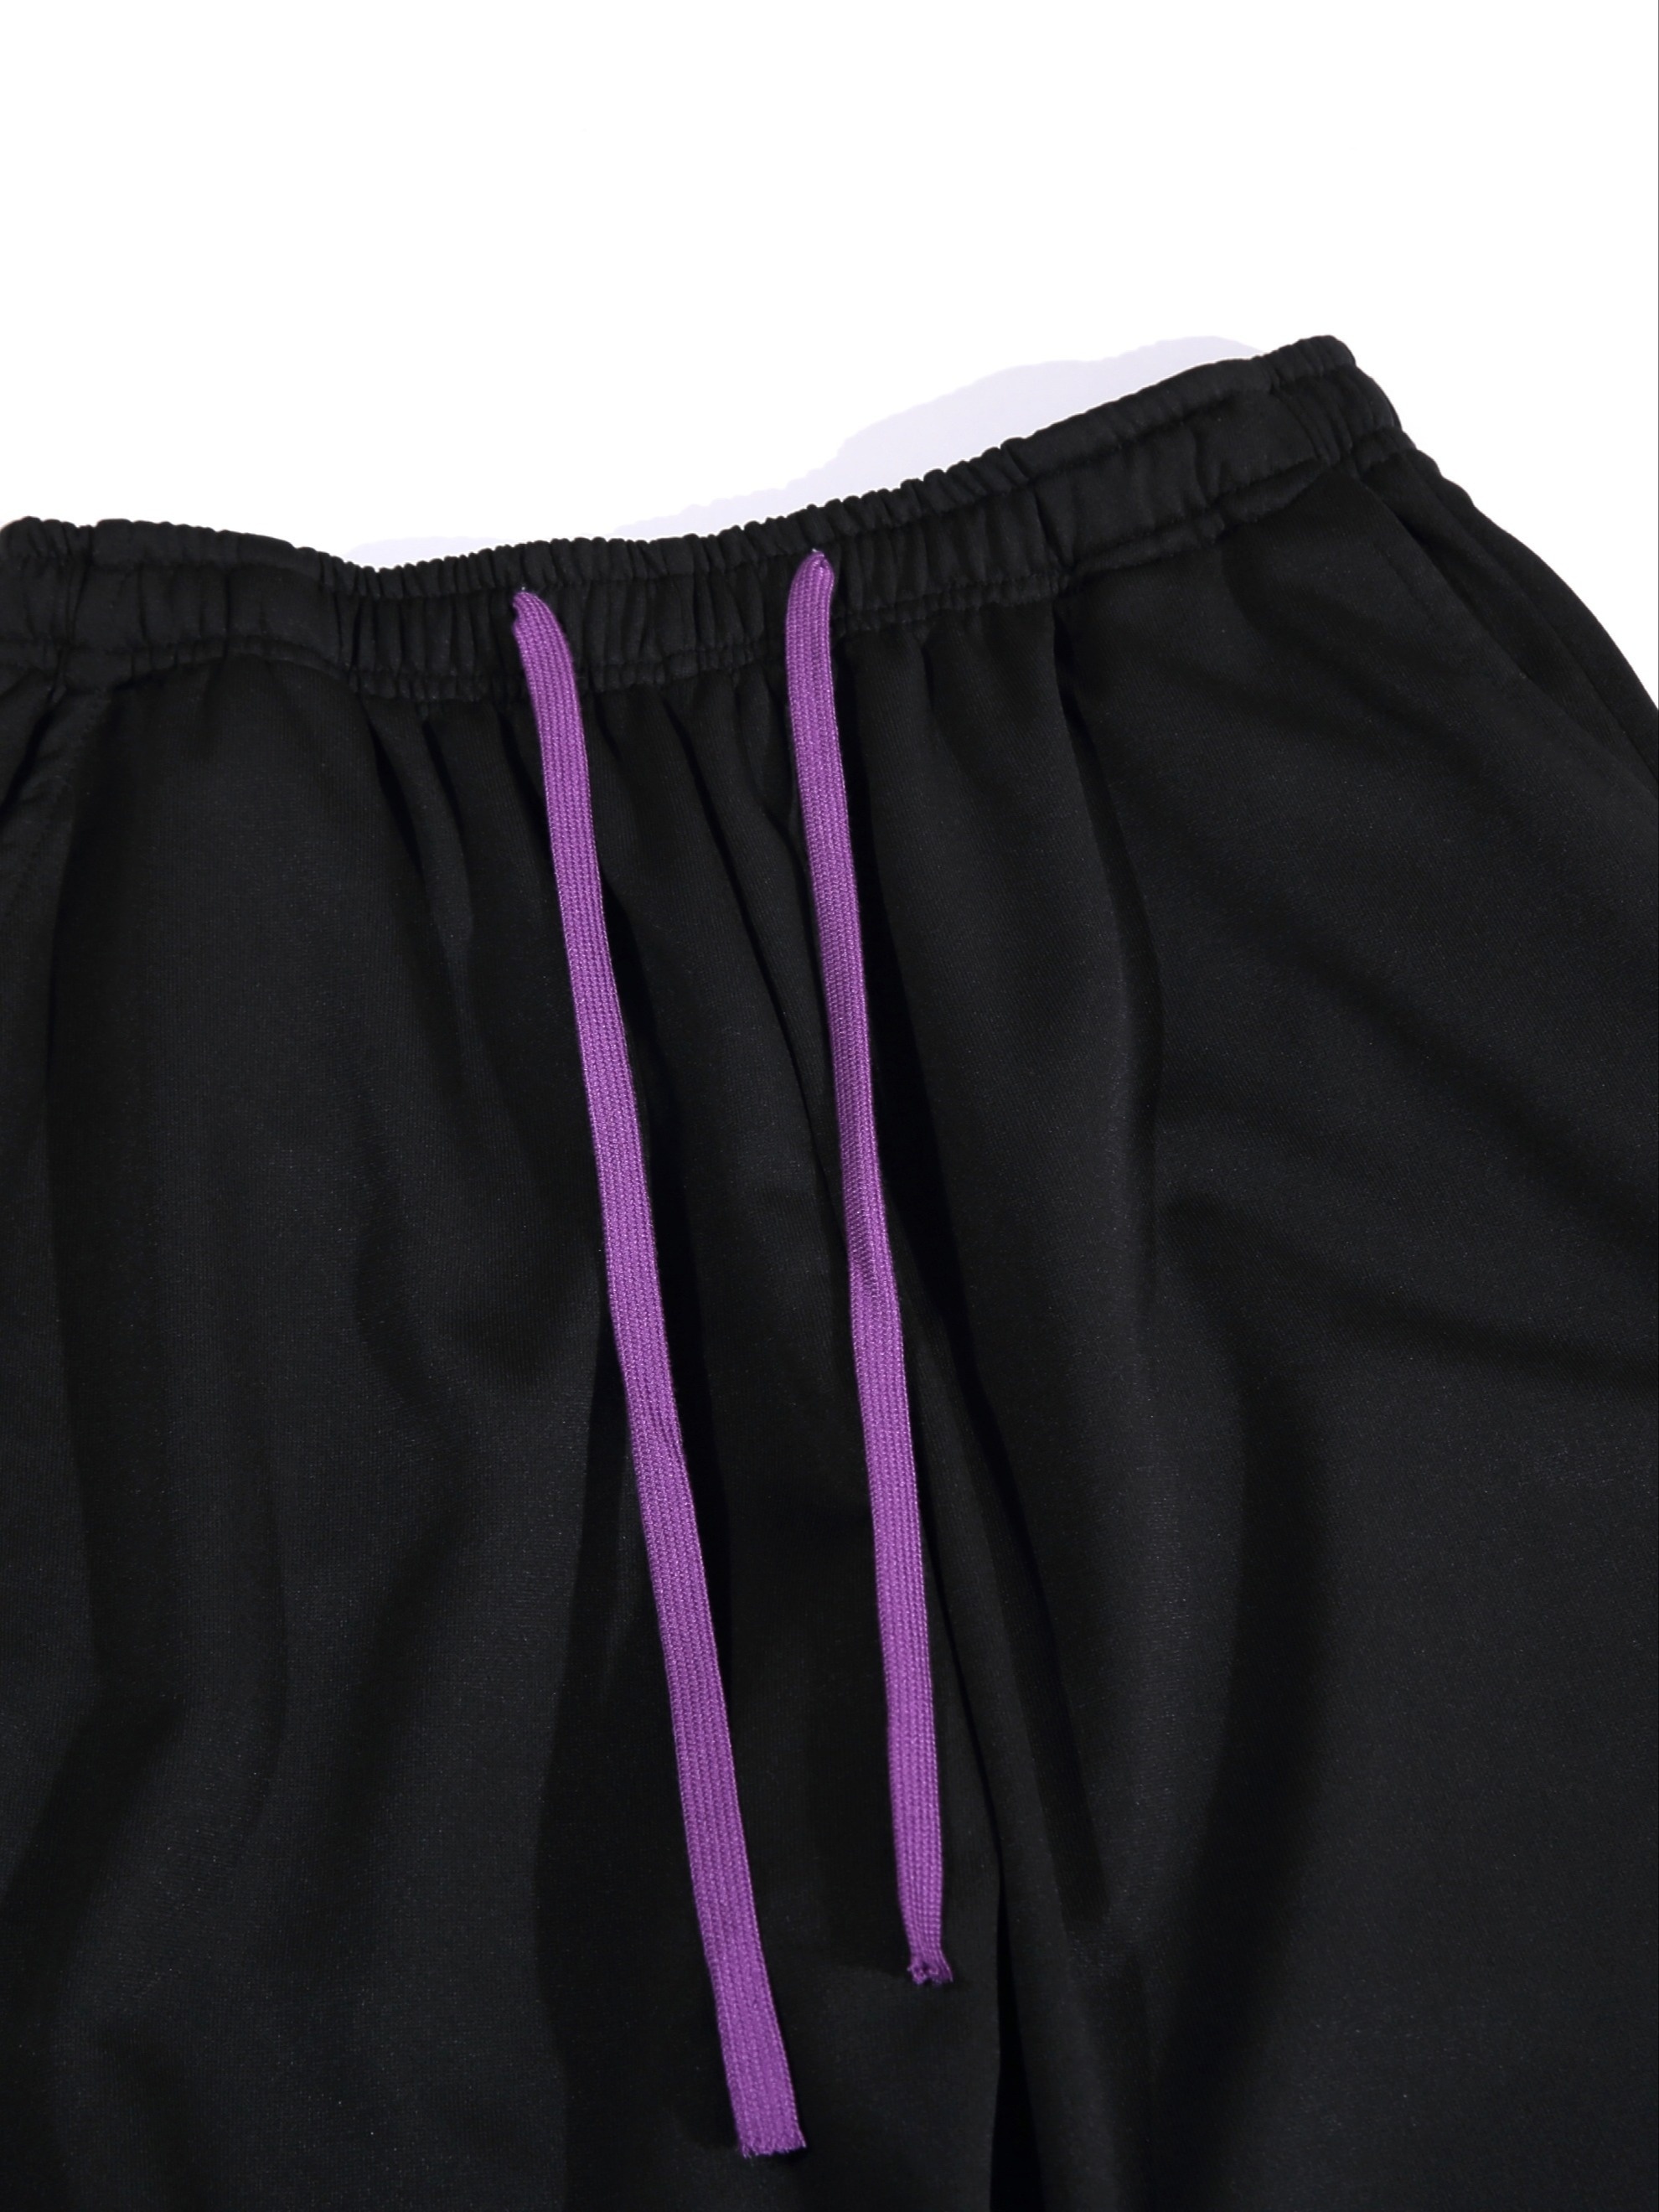 Fashion (Pink Pant)Sweatpants Fabric Drawstring Running Sport